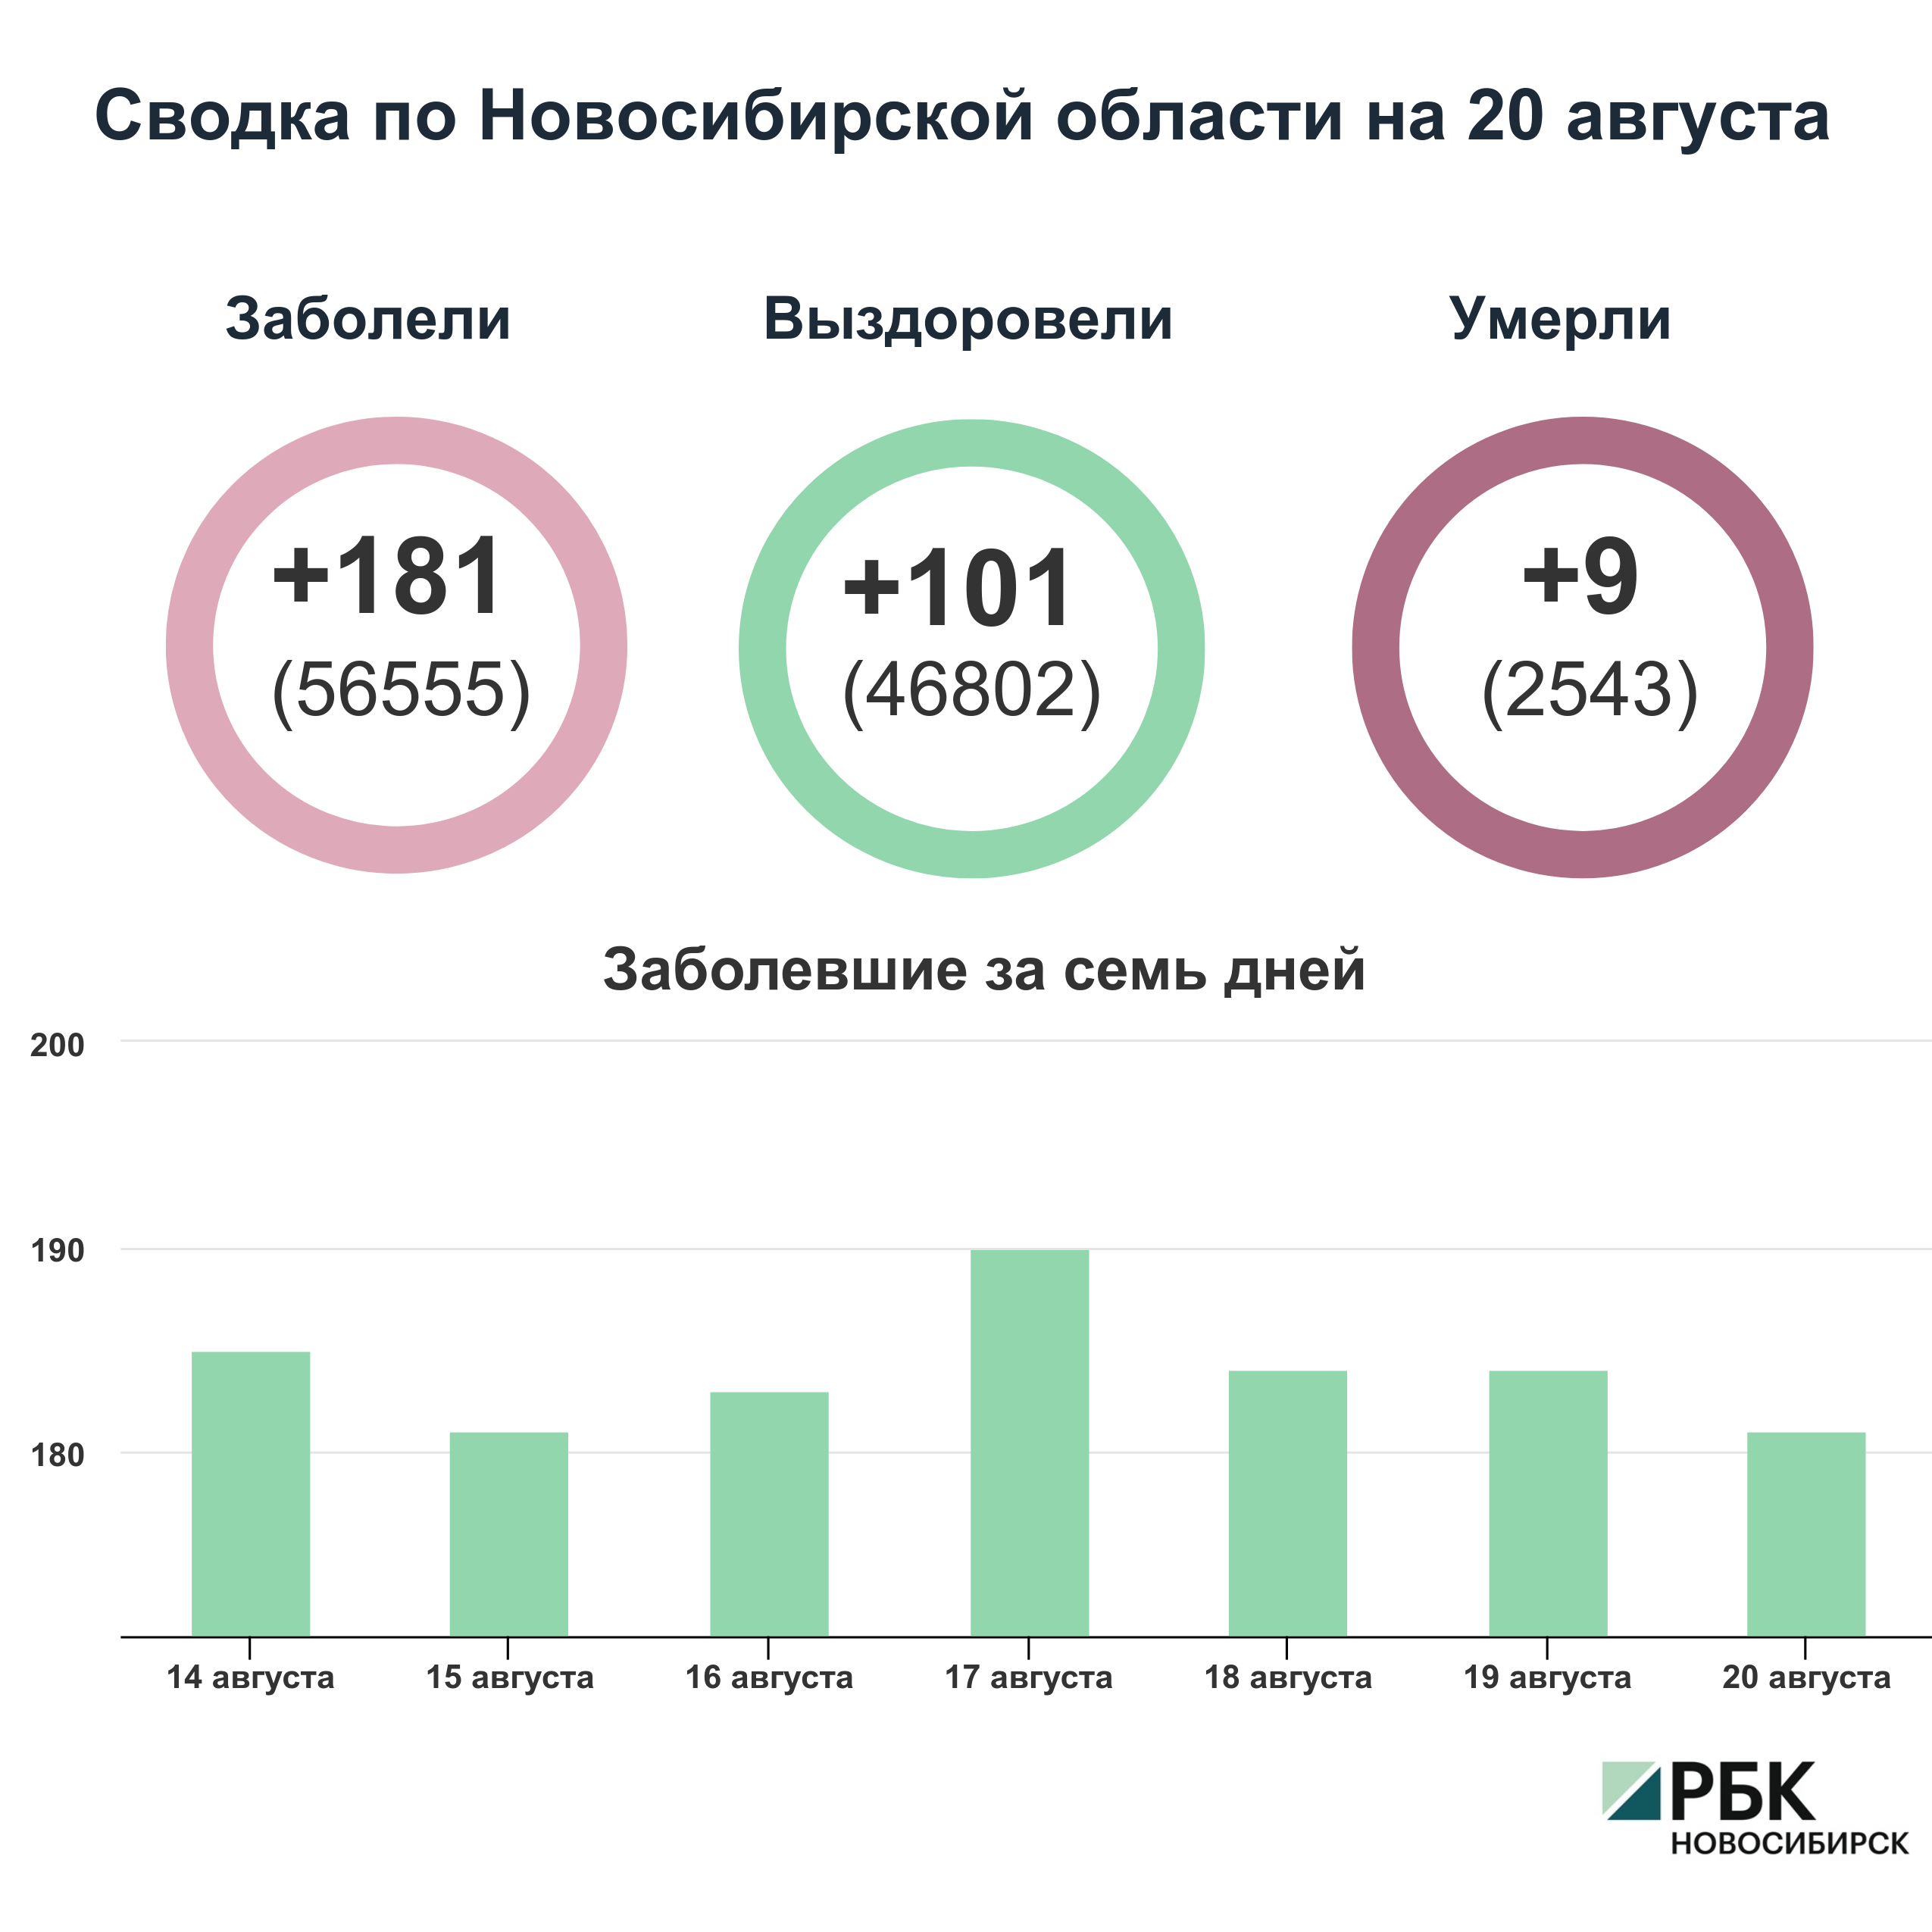 Коронавирус в Новосибирске: сводка на 20 августа